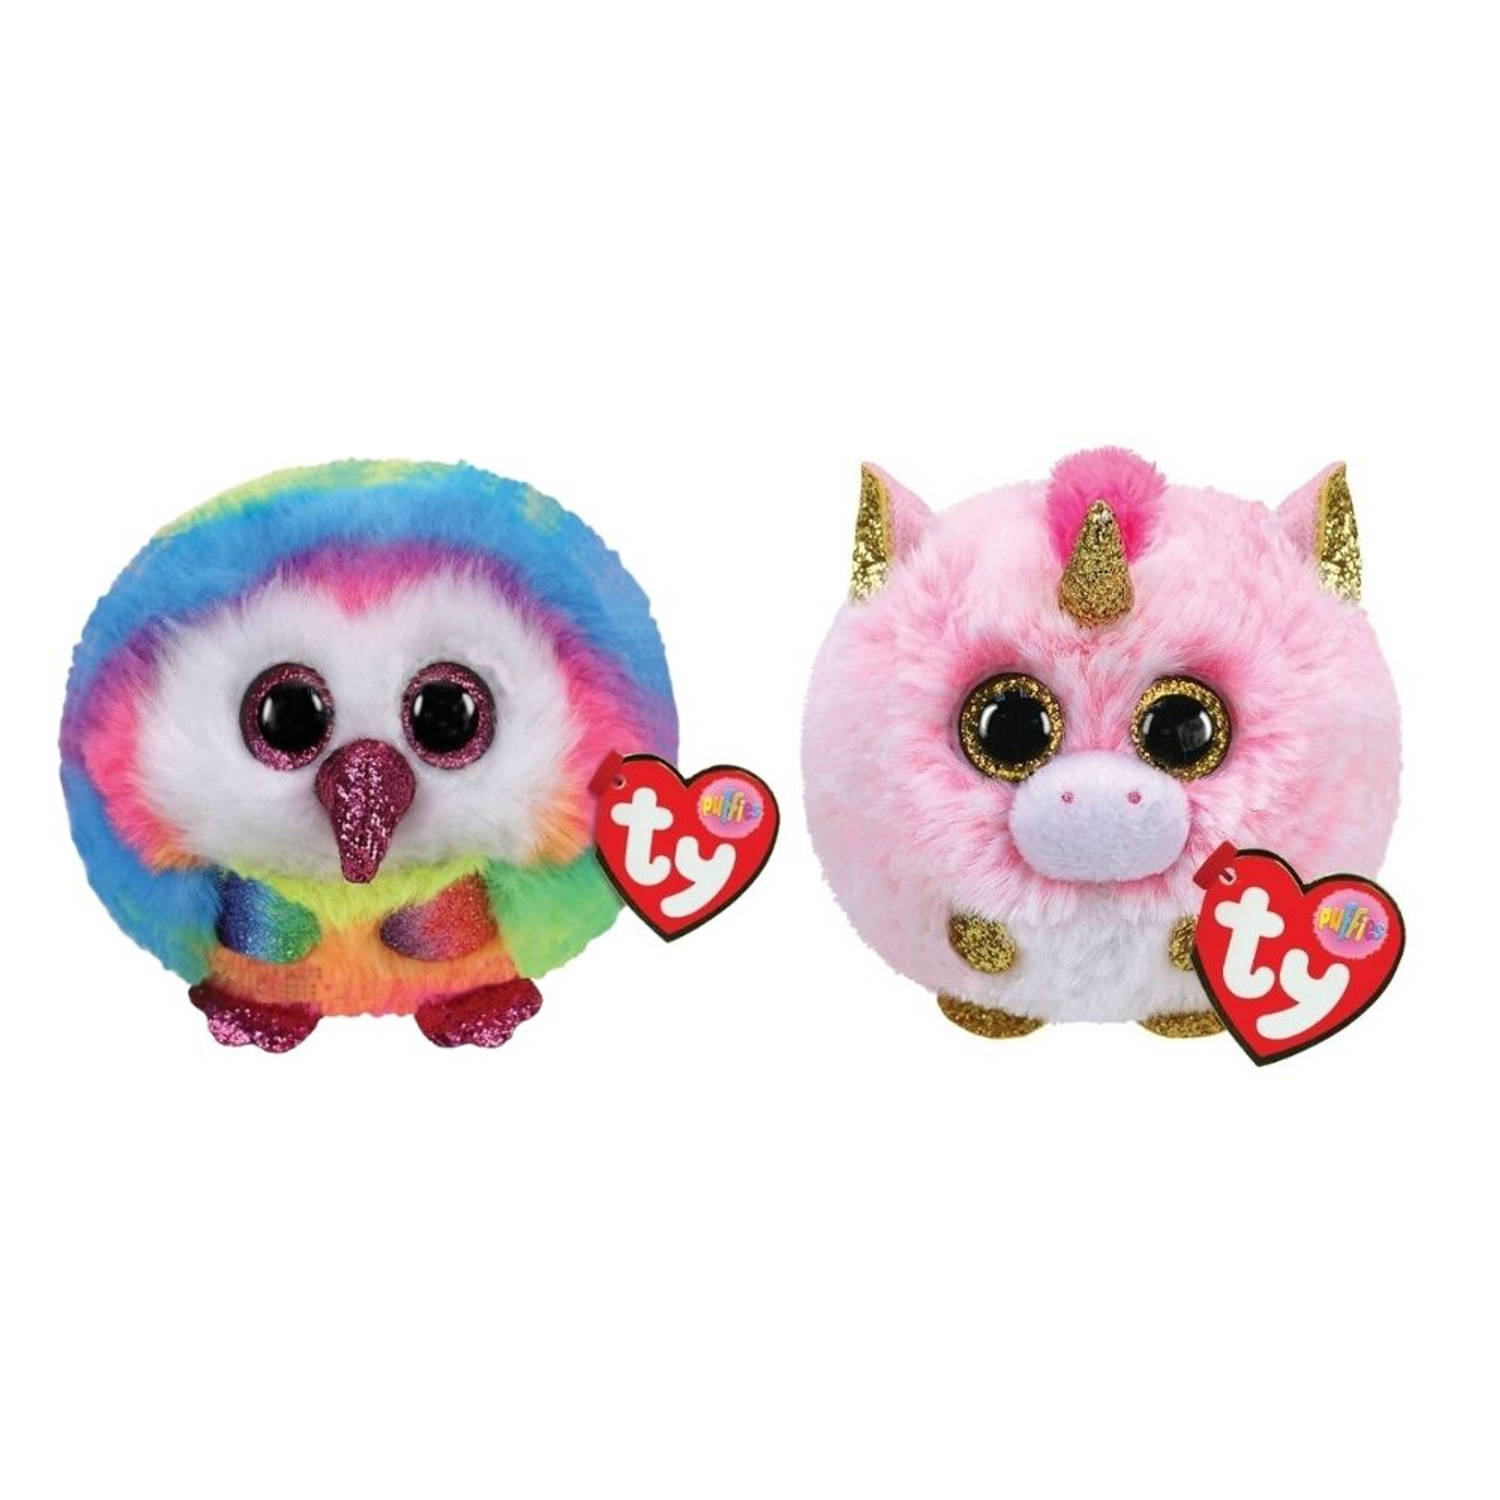 Ty - Knuffel - Teeny Puffies - Owel Owl & Fantasia Unicorn